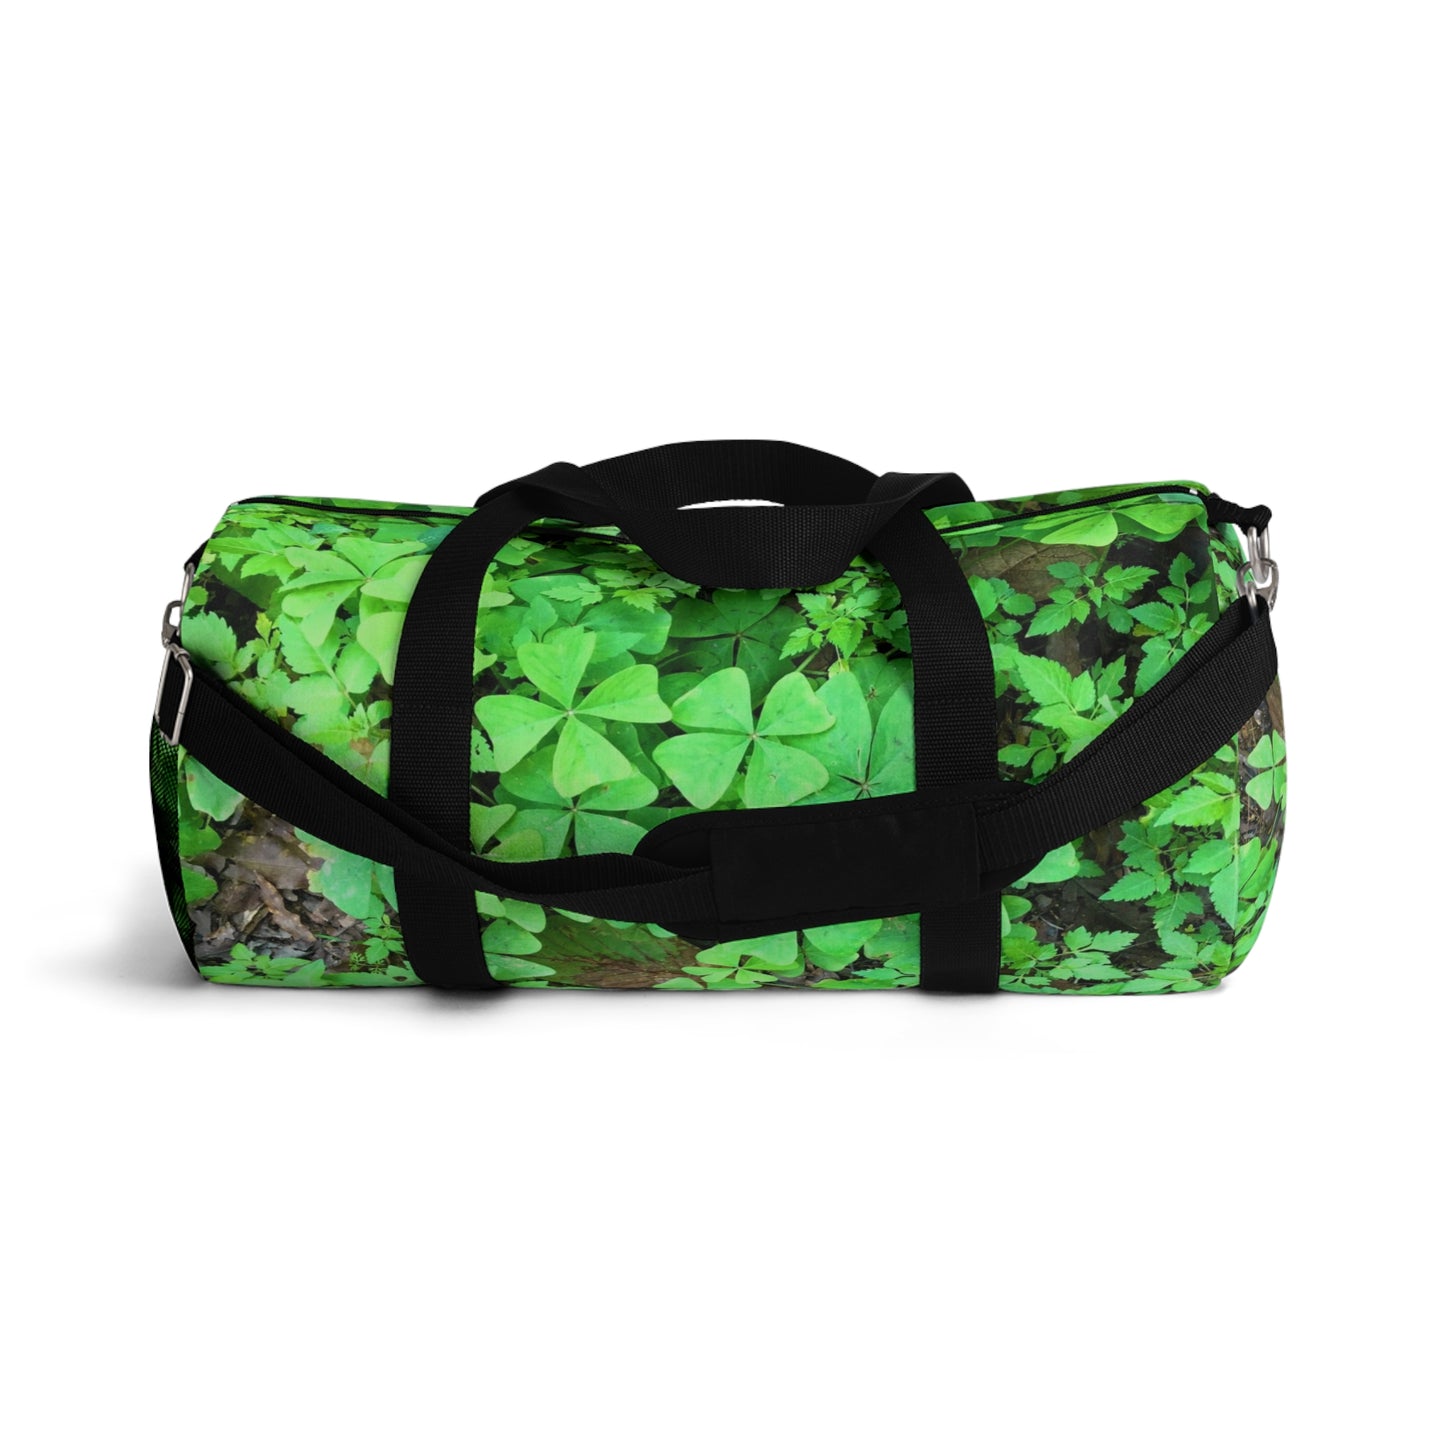 The Good Luck Weekender Duffel Bag 🍀